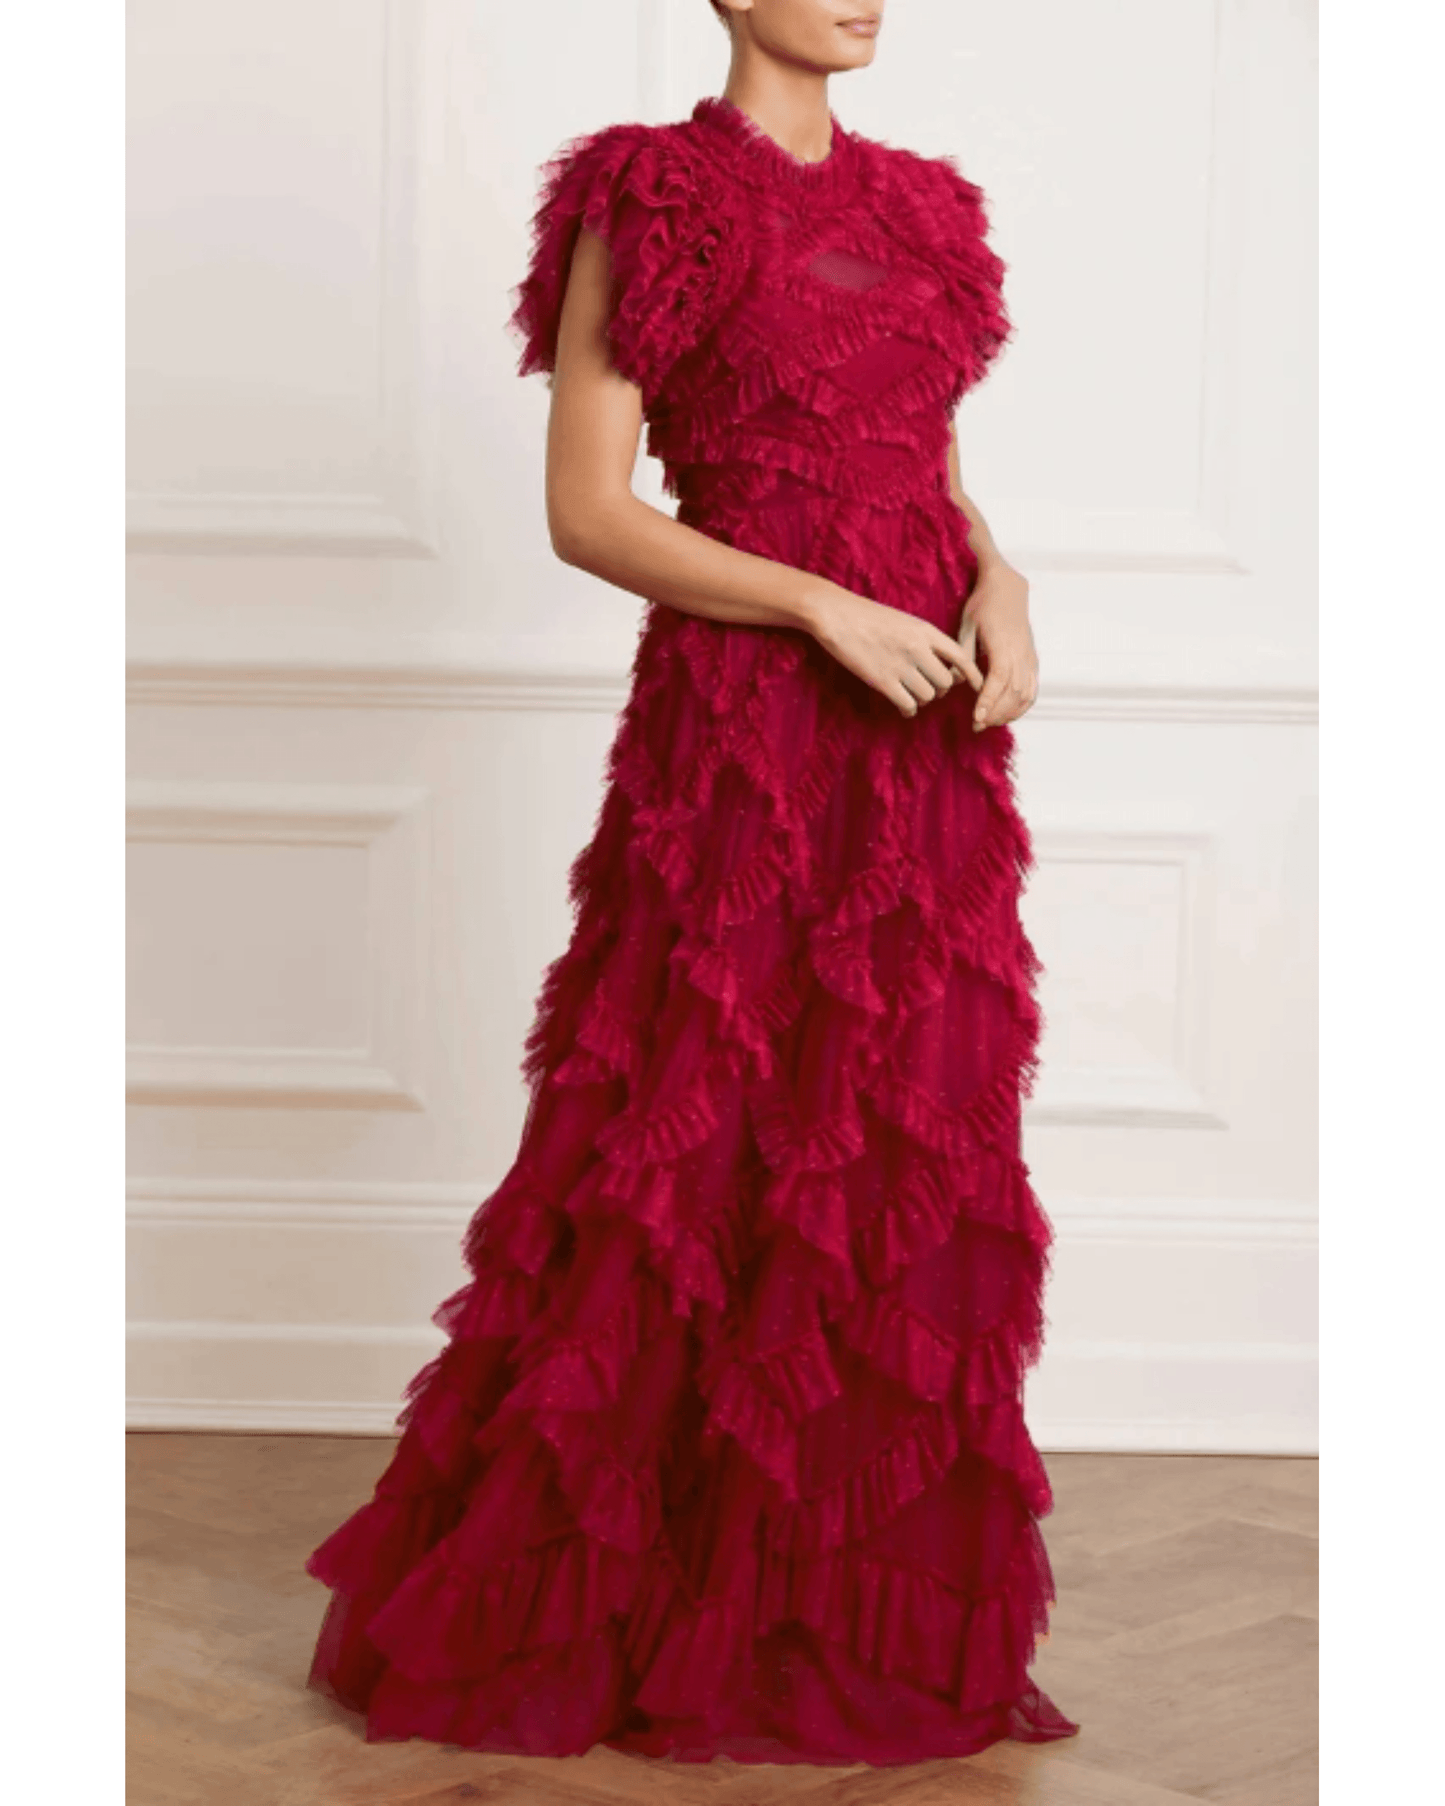 Genevieve Ruffle Gown Dress - Endless